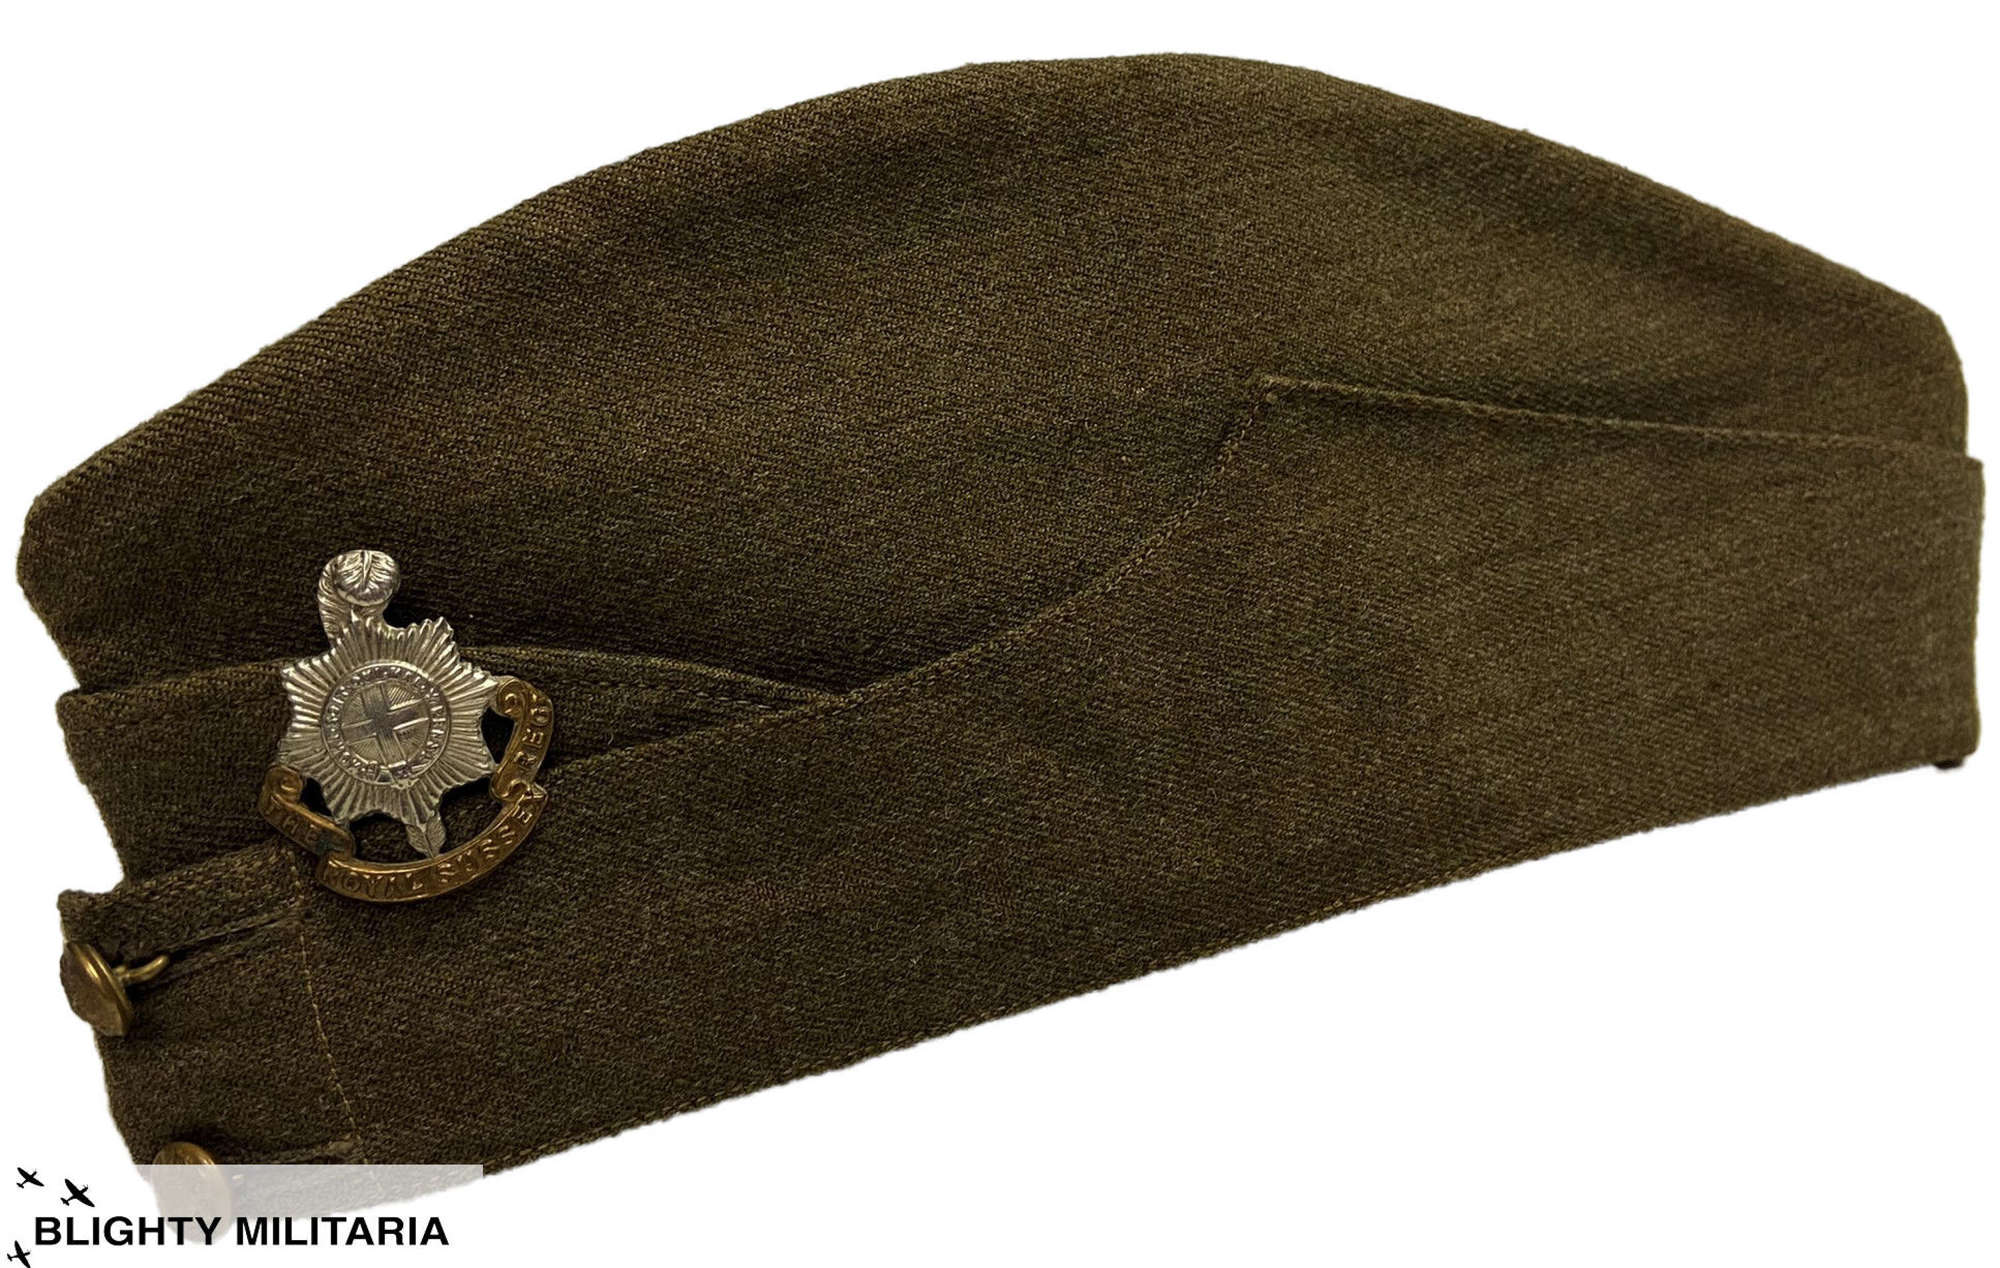 Original Early WW2 British Army Field Service Cap - Sussex Regiment